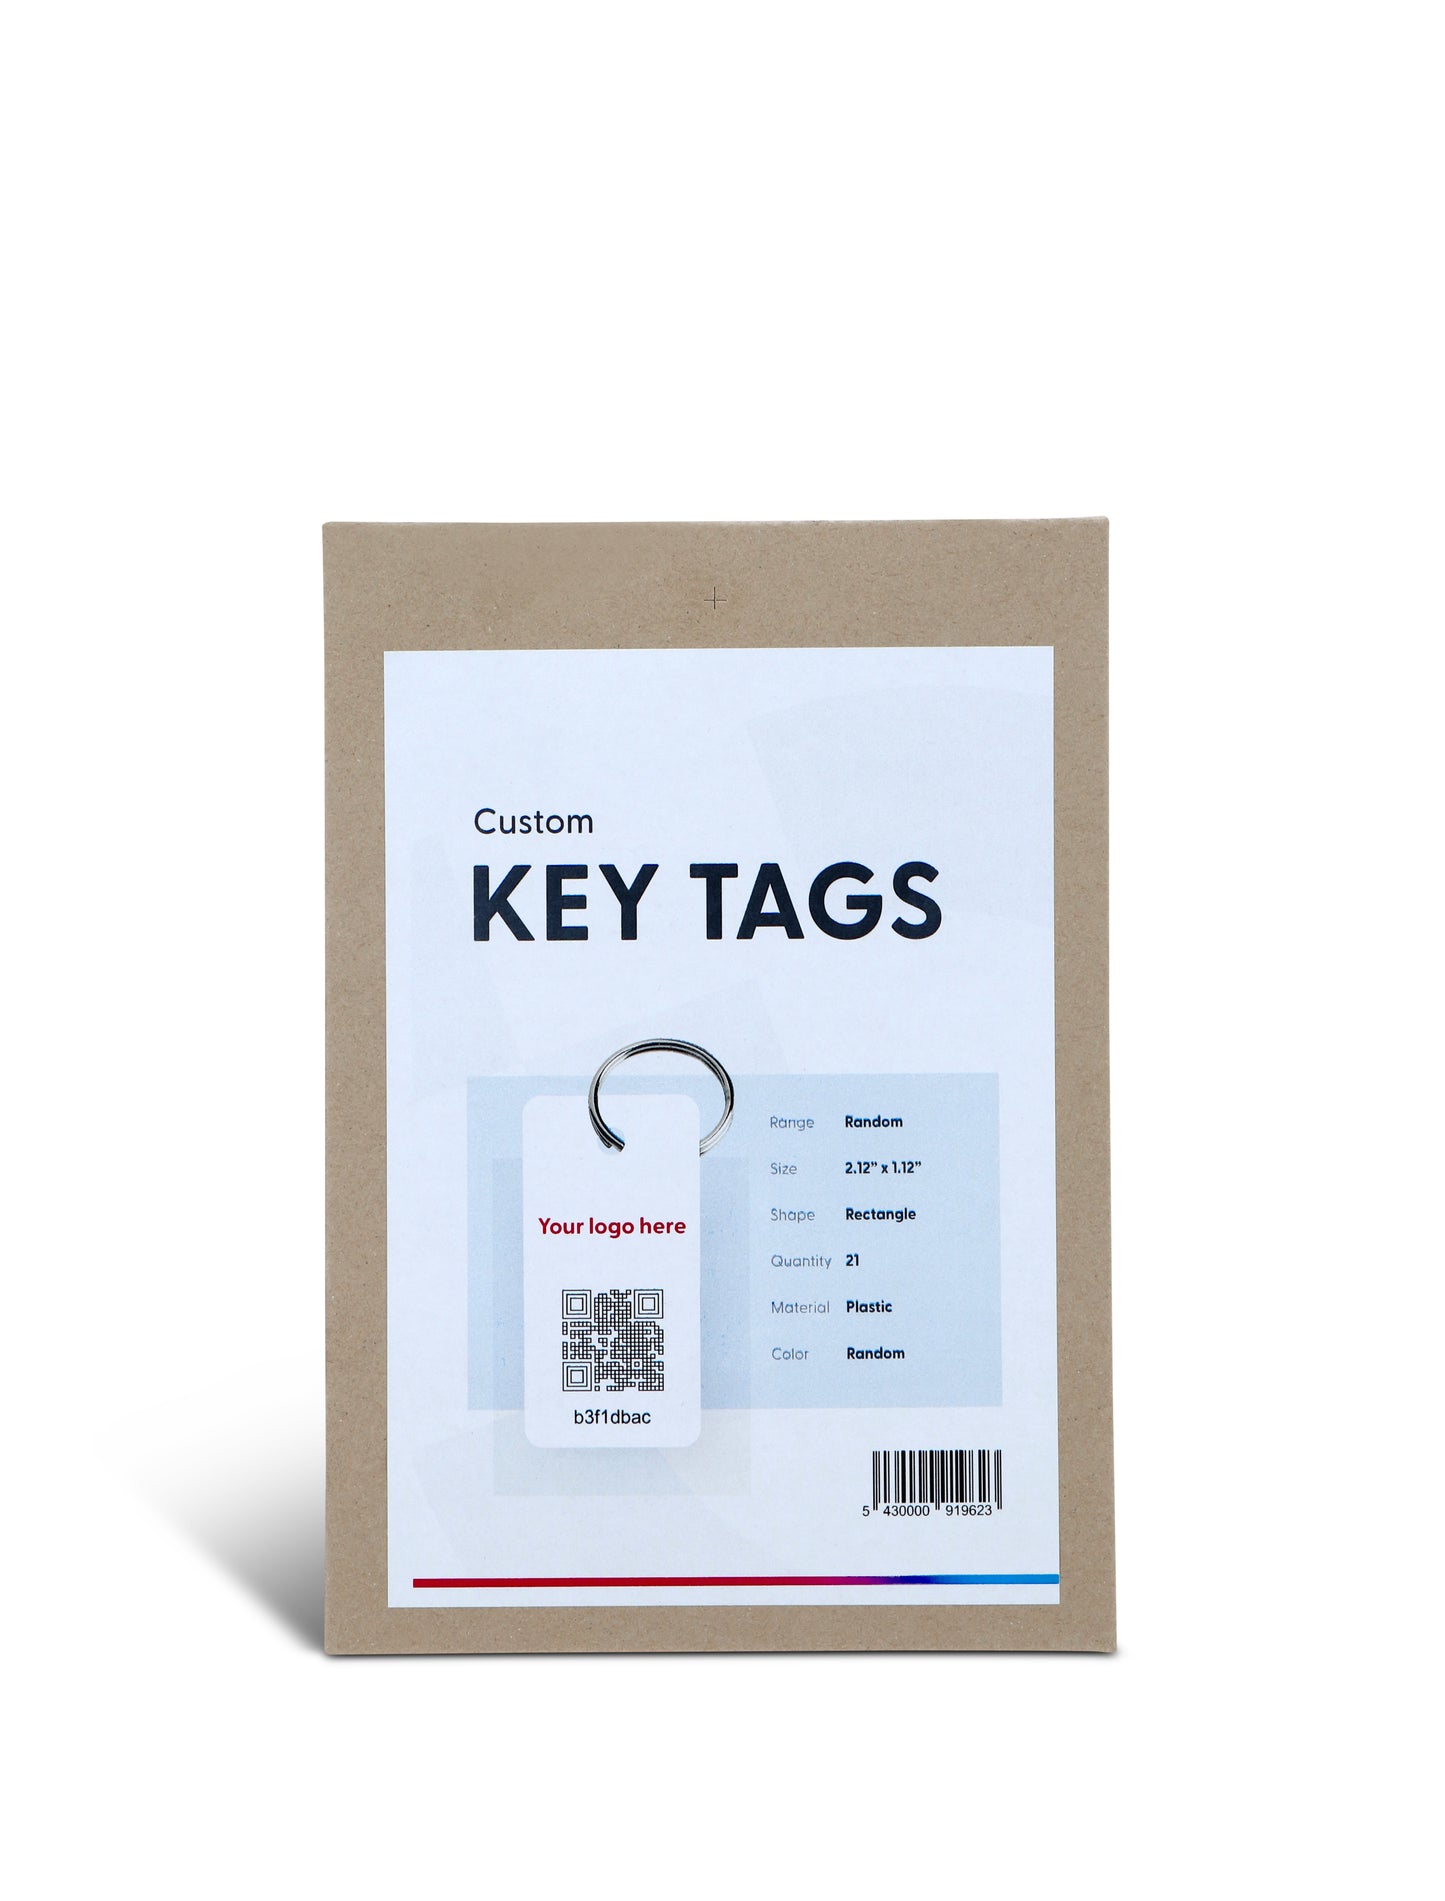 21 Customized Key Tags